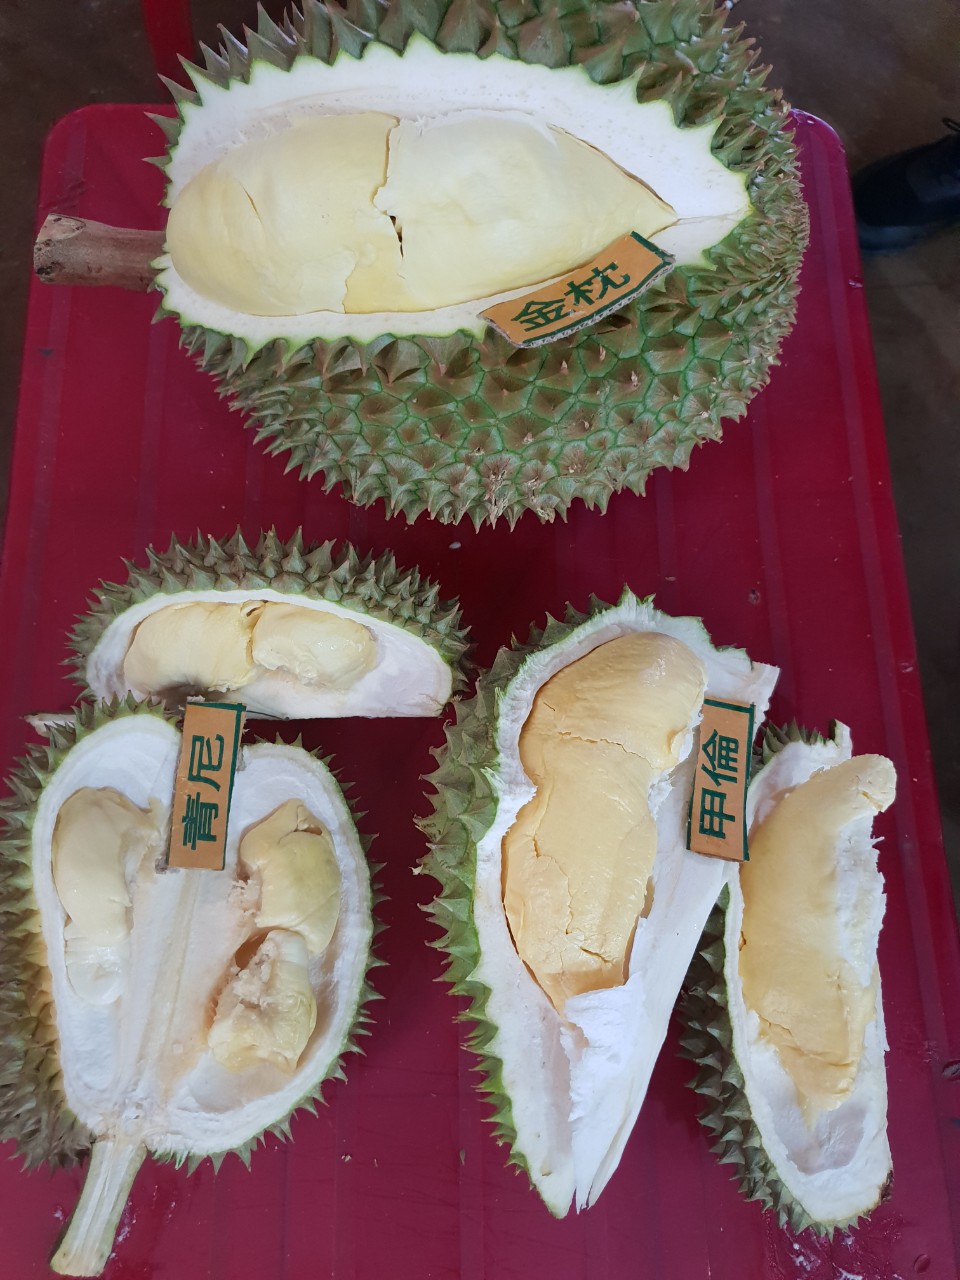 Jem durian